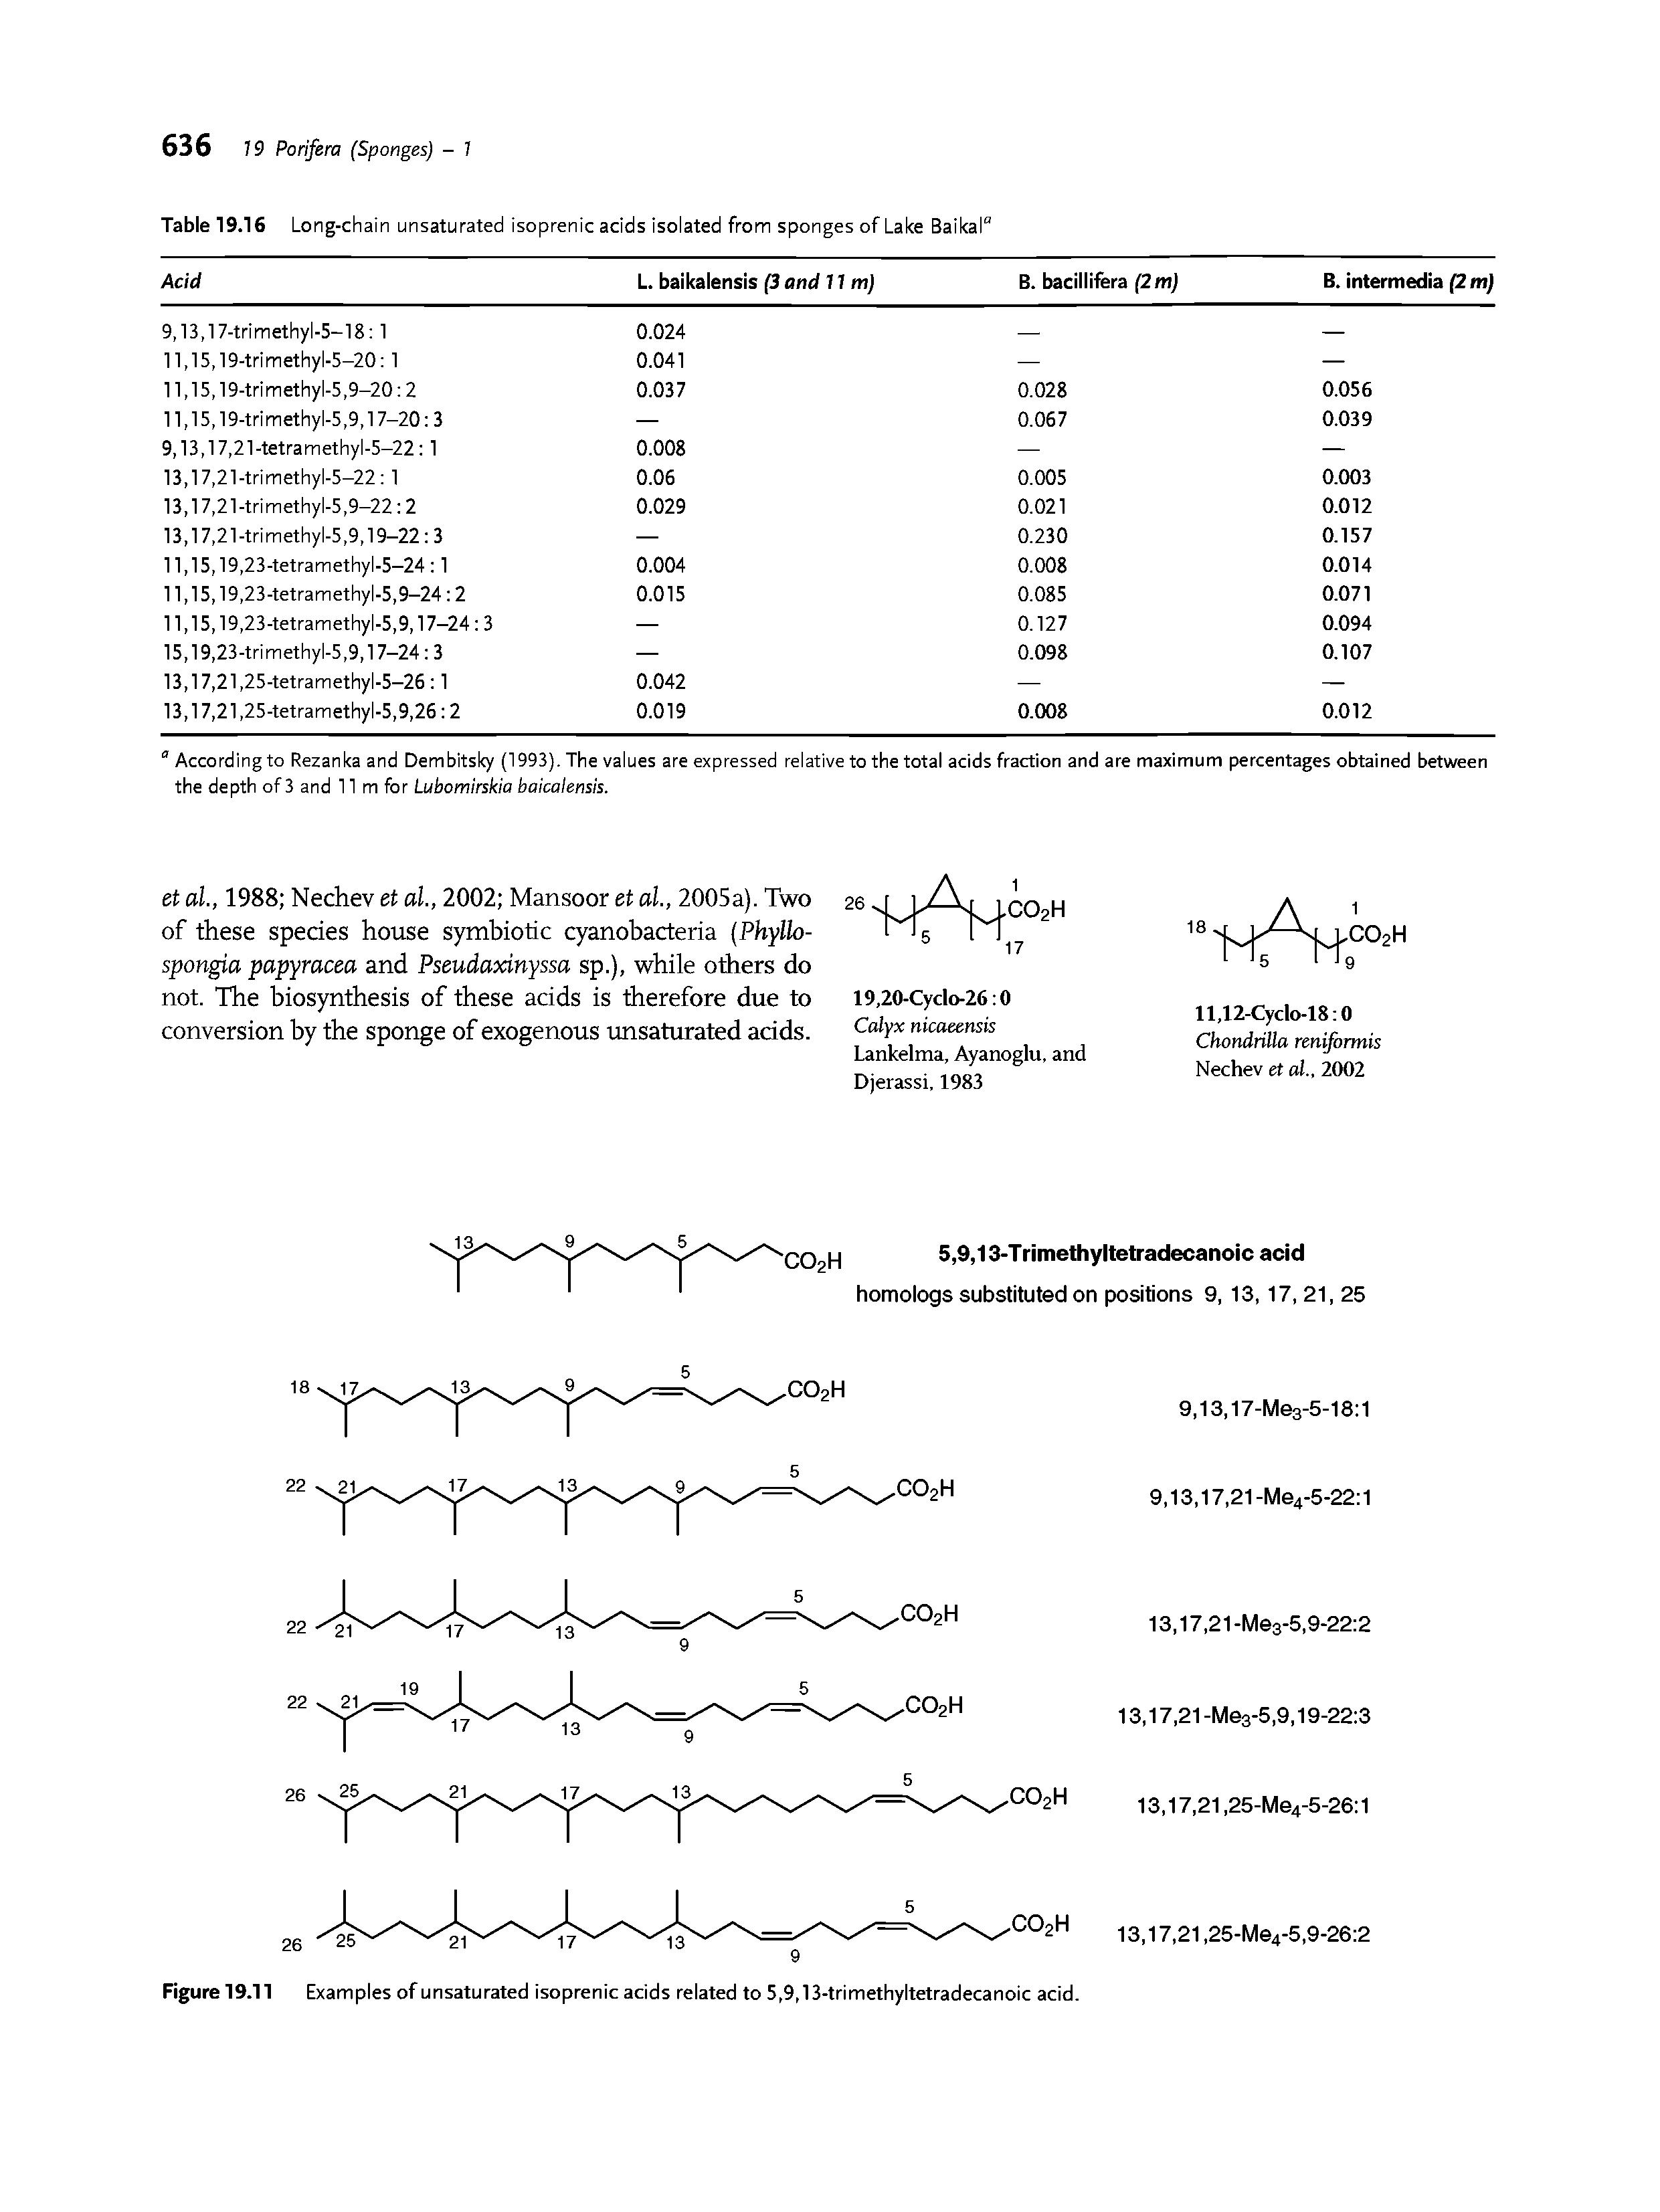 Figure 19.11 Examples of unsaturated isoprenic acids related to 5,9,13-trimethyltetradecanoic acid.